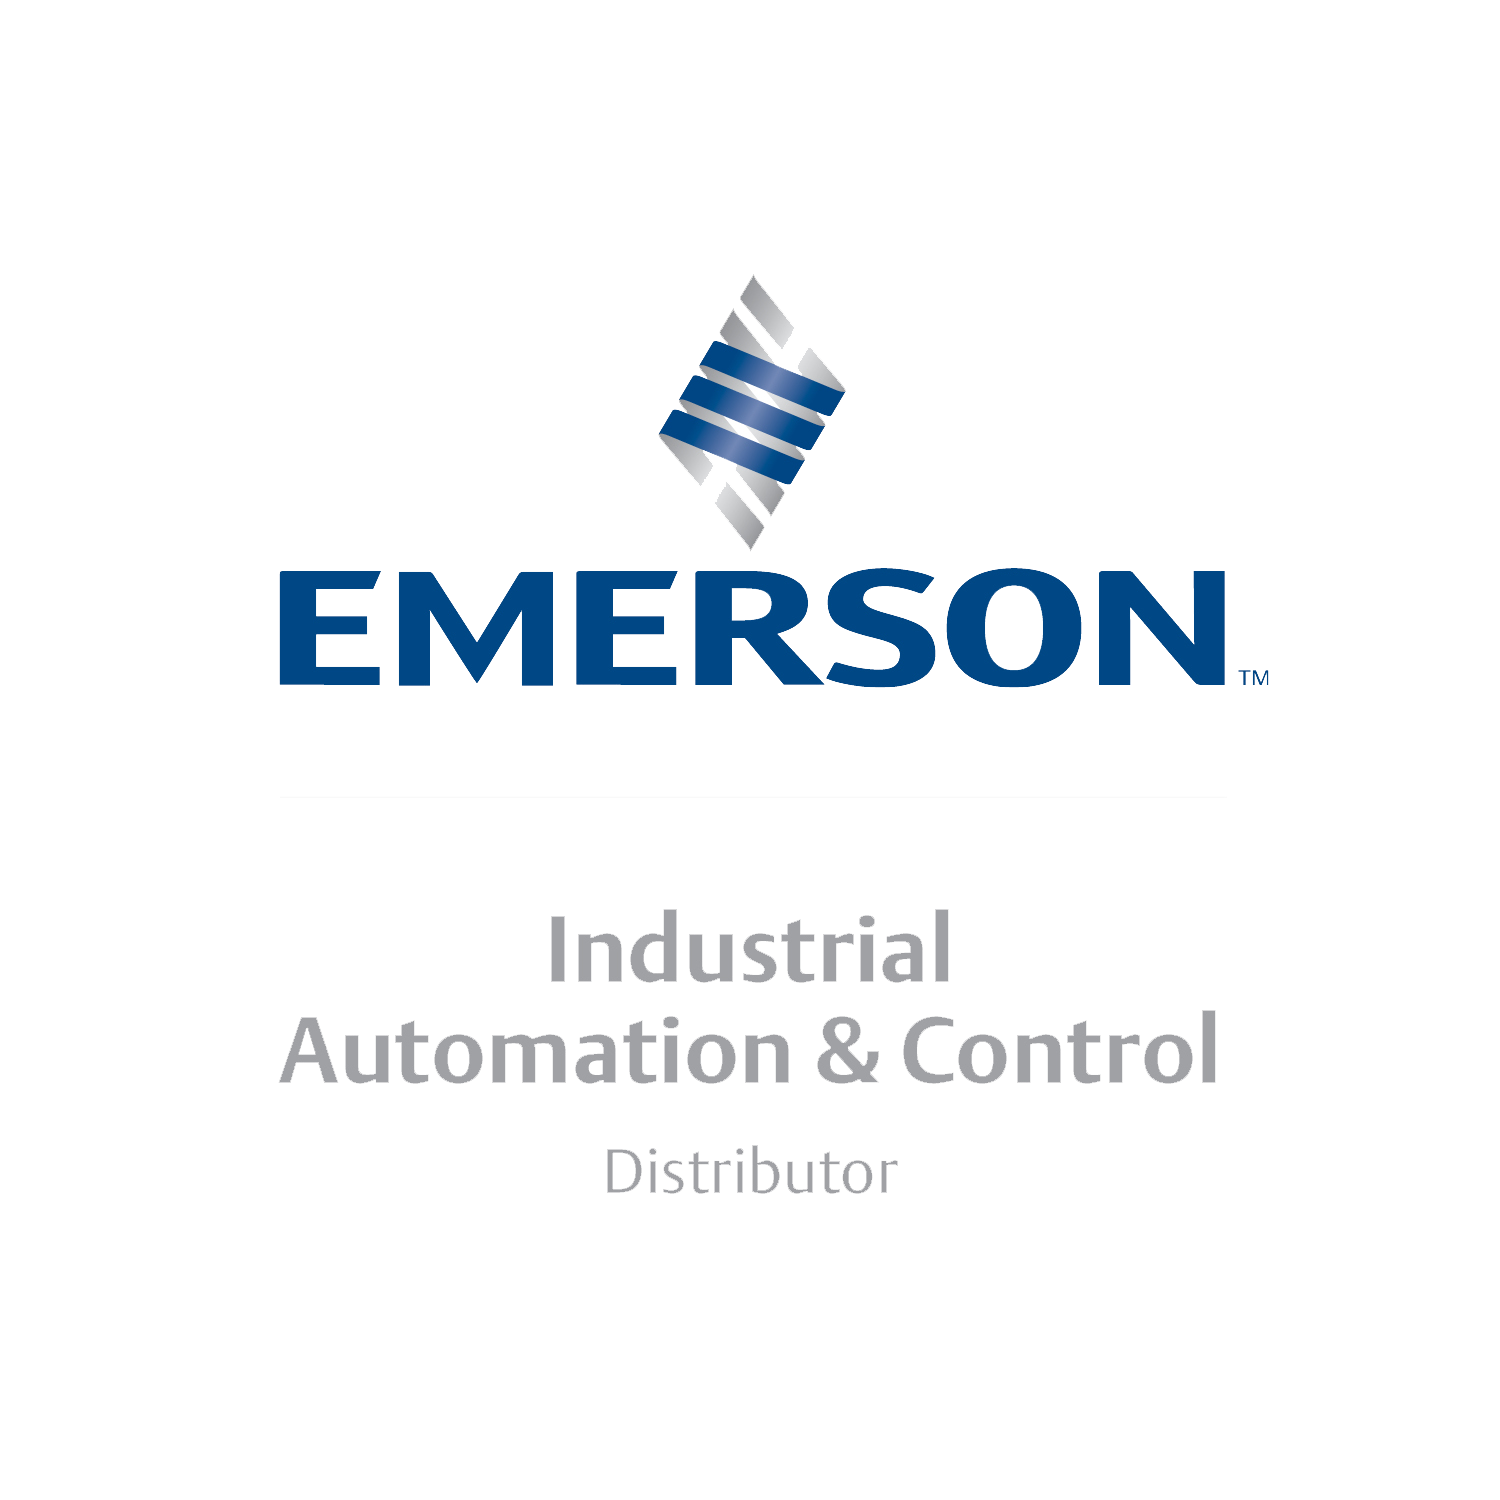 EmersonLogo IndustrialAutomation stack1